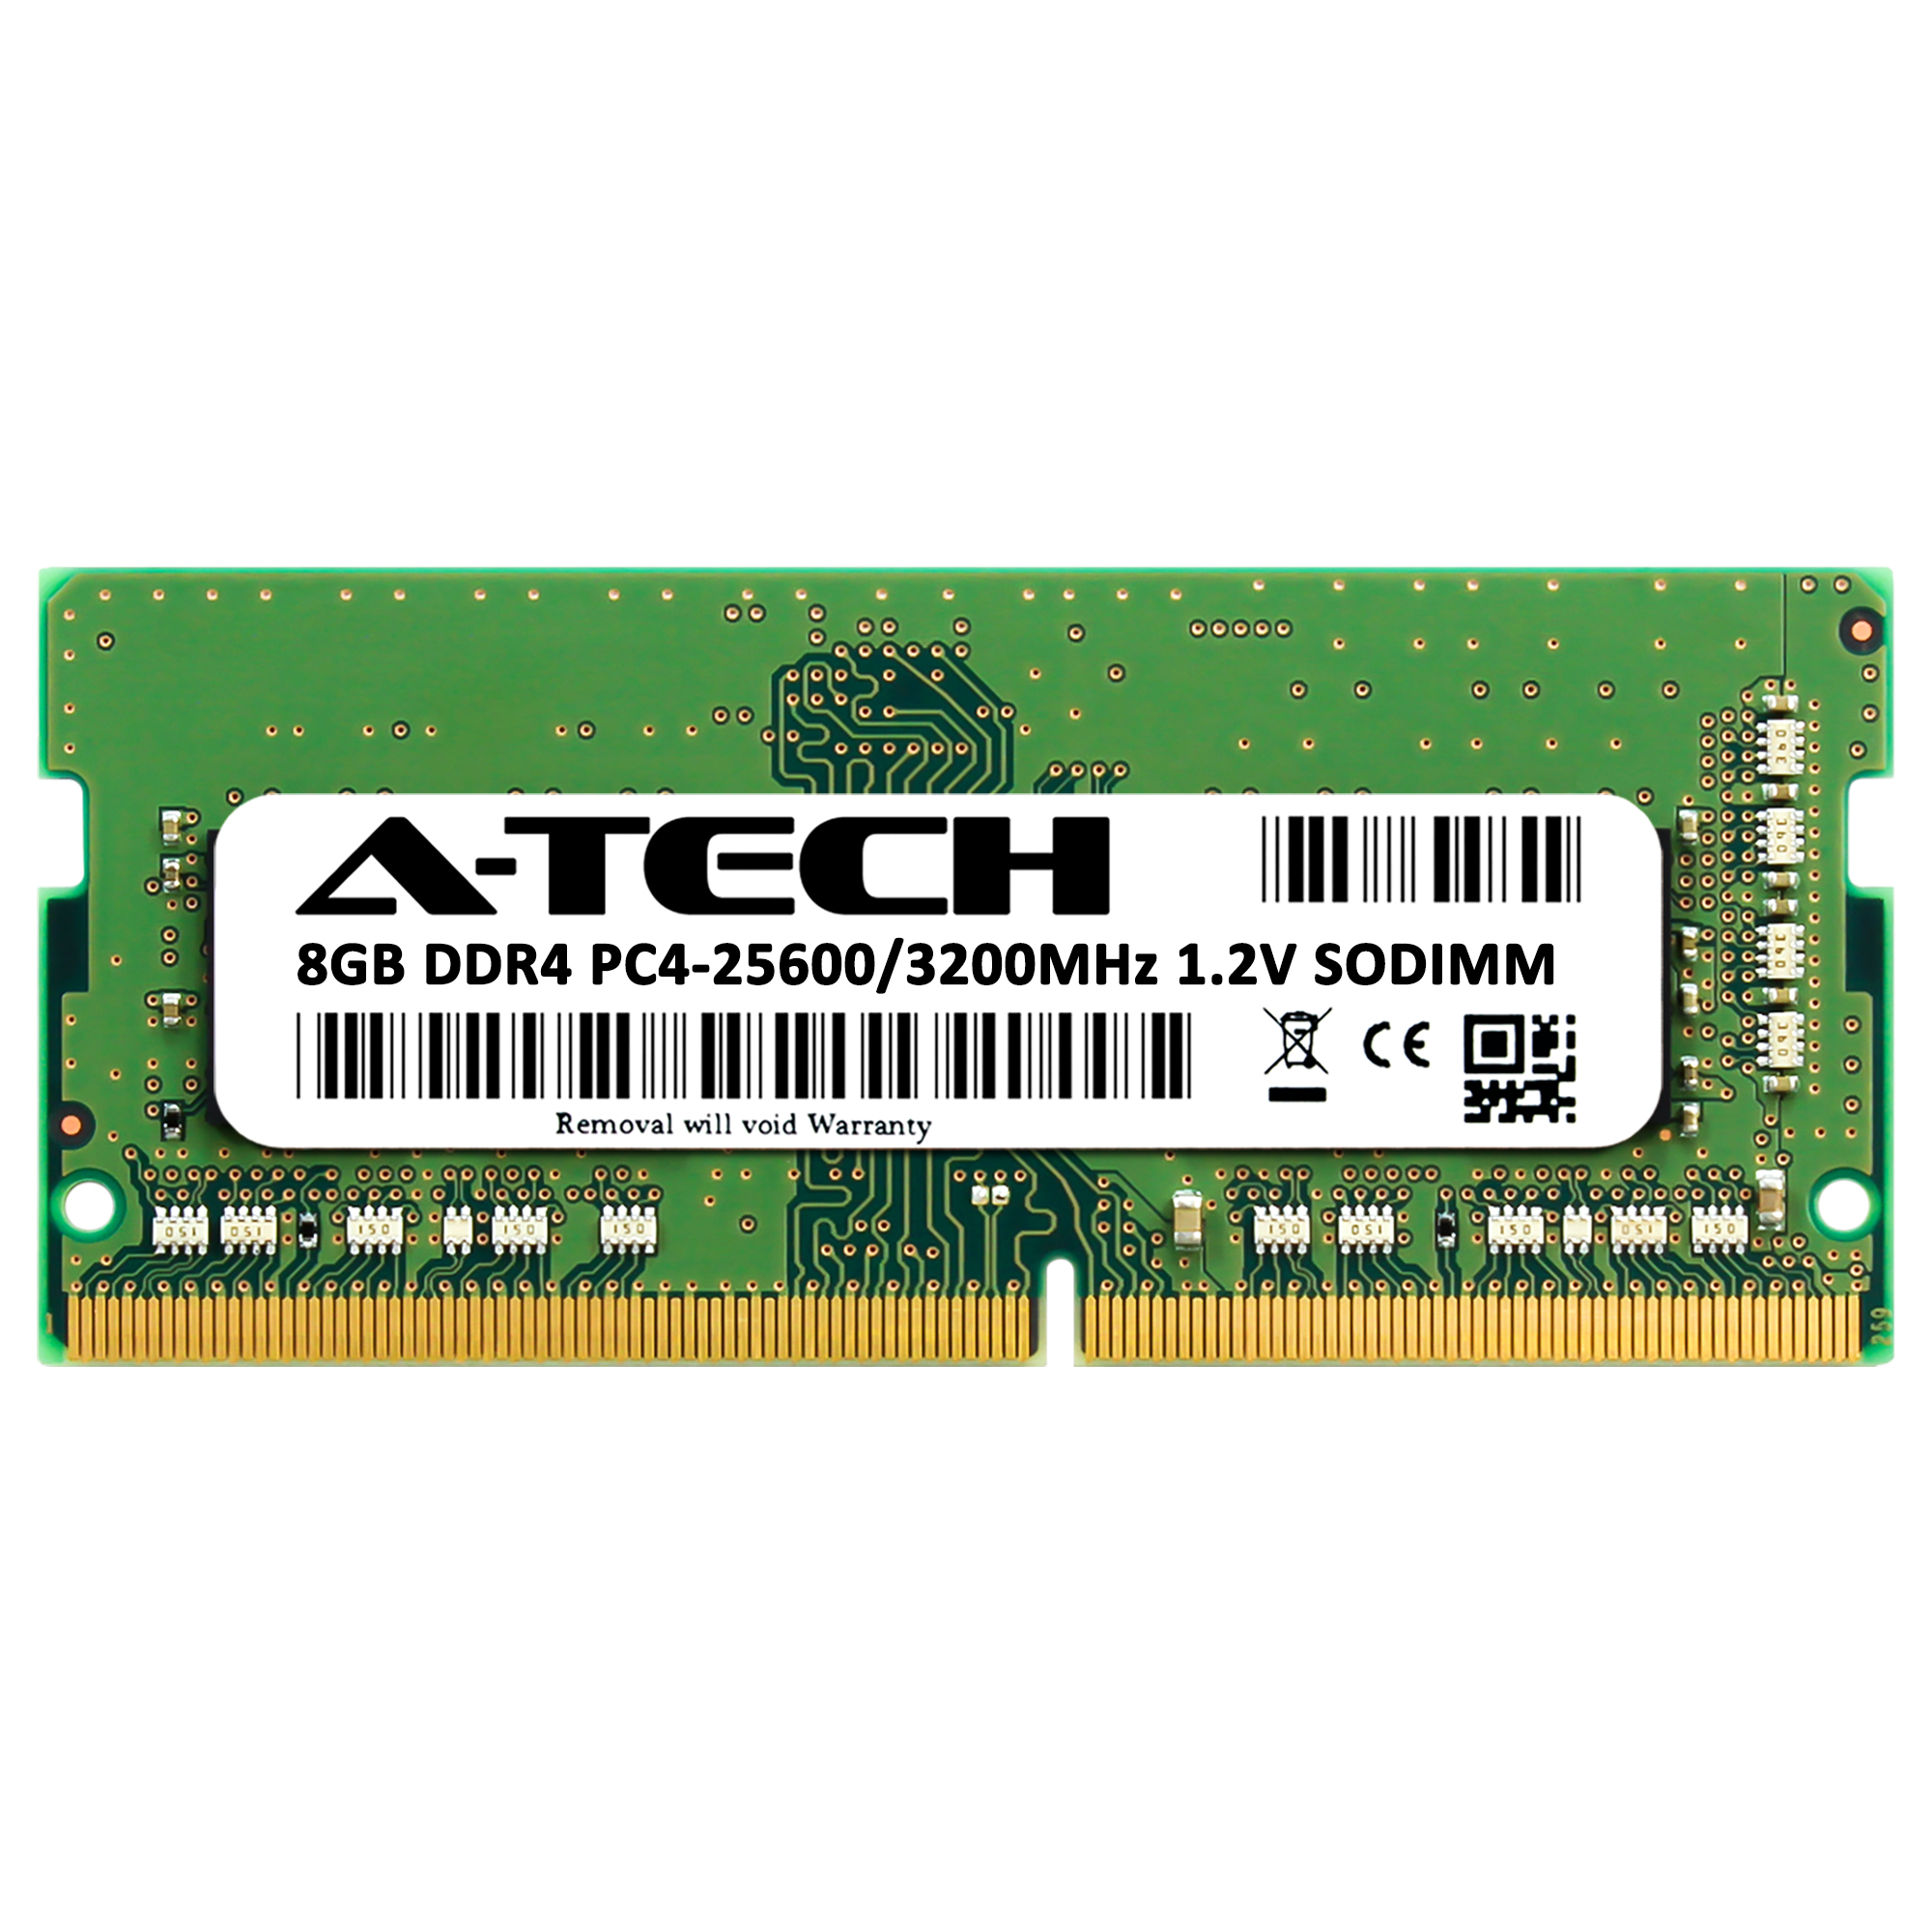 8GB DDR4 3200MHz PC4-25600 SODIMM Laptop Memory RAM for Dell XPS 15 7590 |  eBay